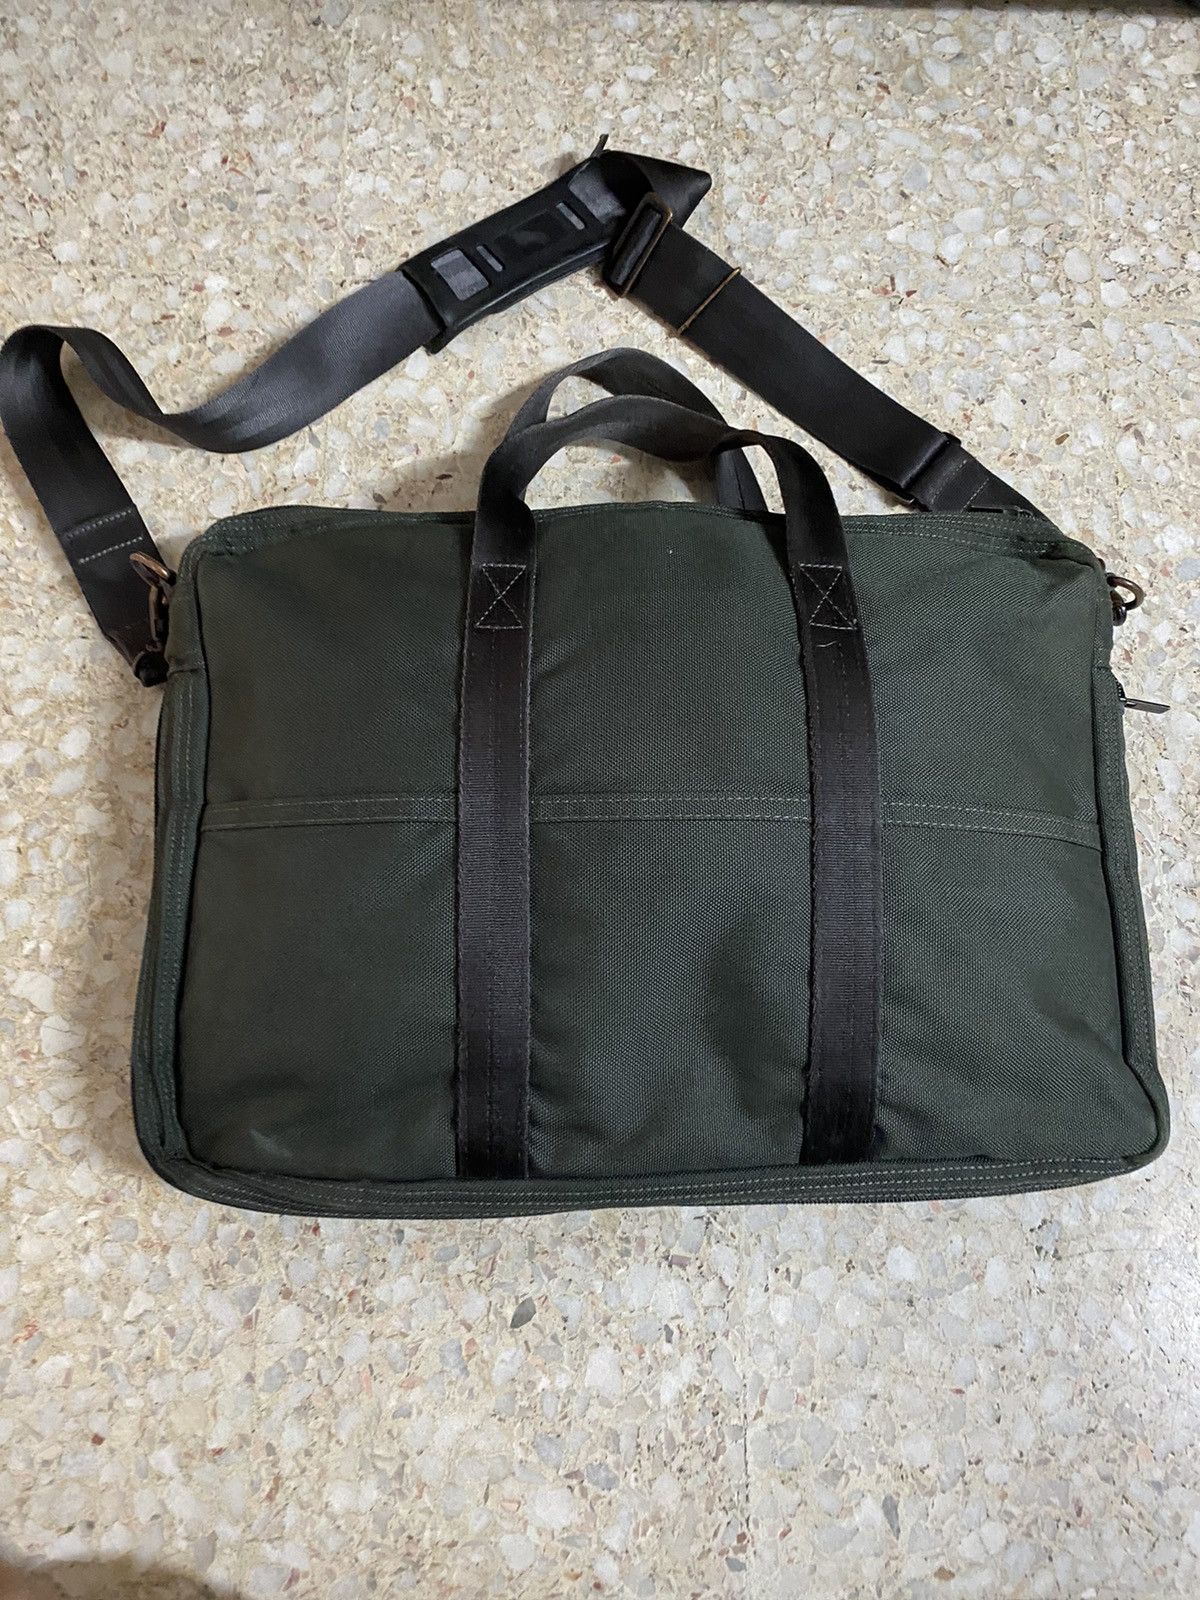 Porter Cordura Messenger Bag Green Army Made in Japan - 10